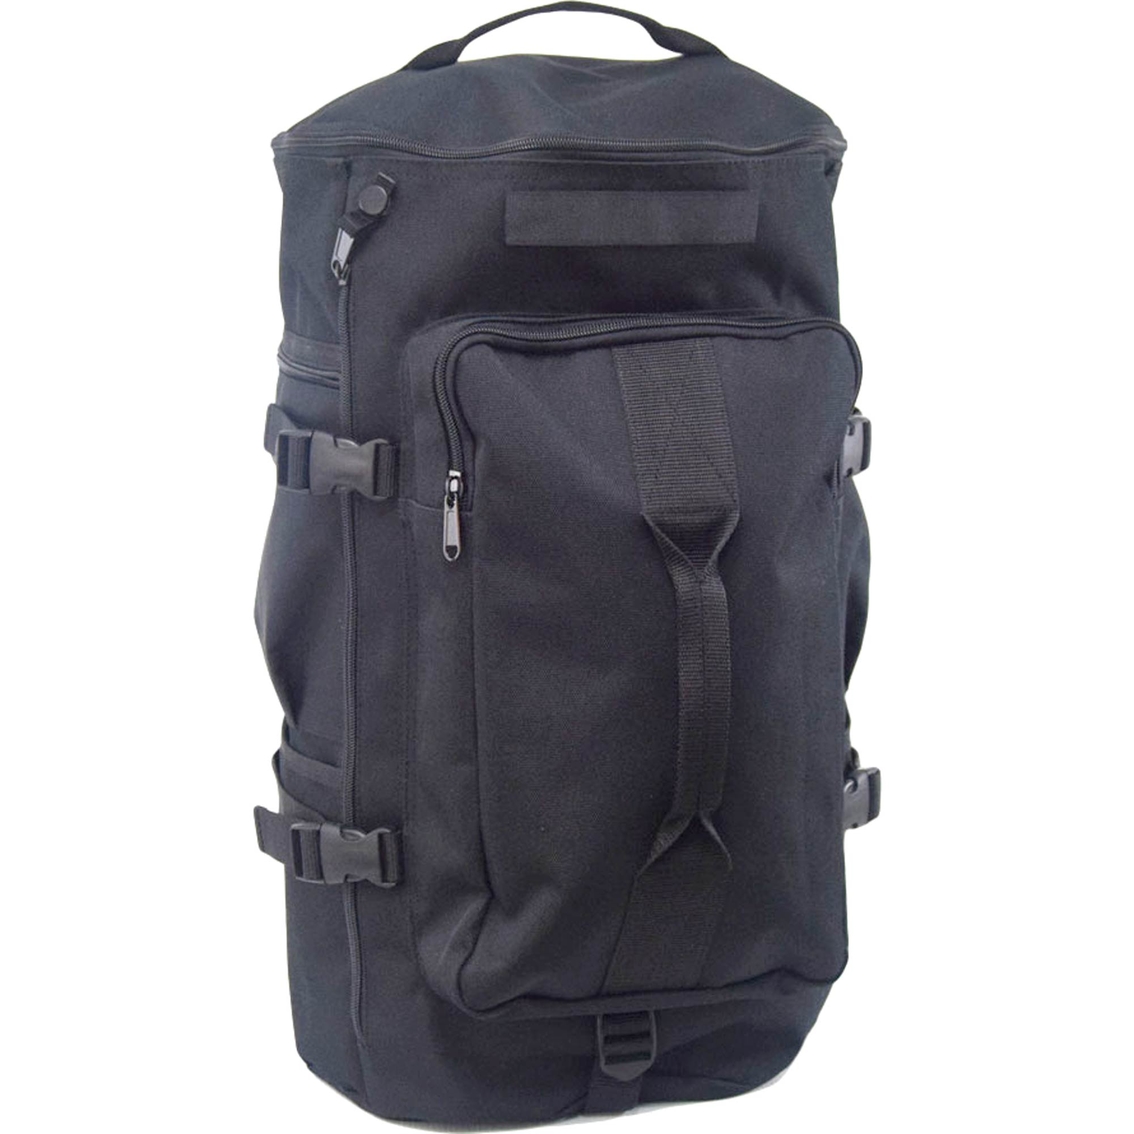 Flying Circle Top Load Duffel Backpack | Backpacks | Clothing ...